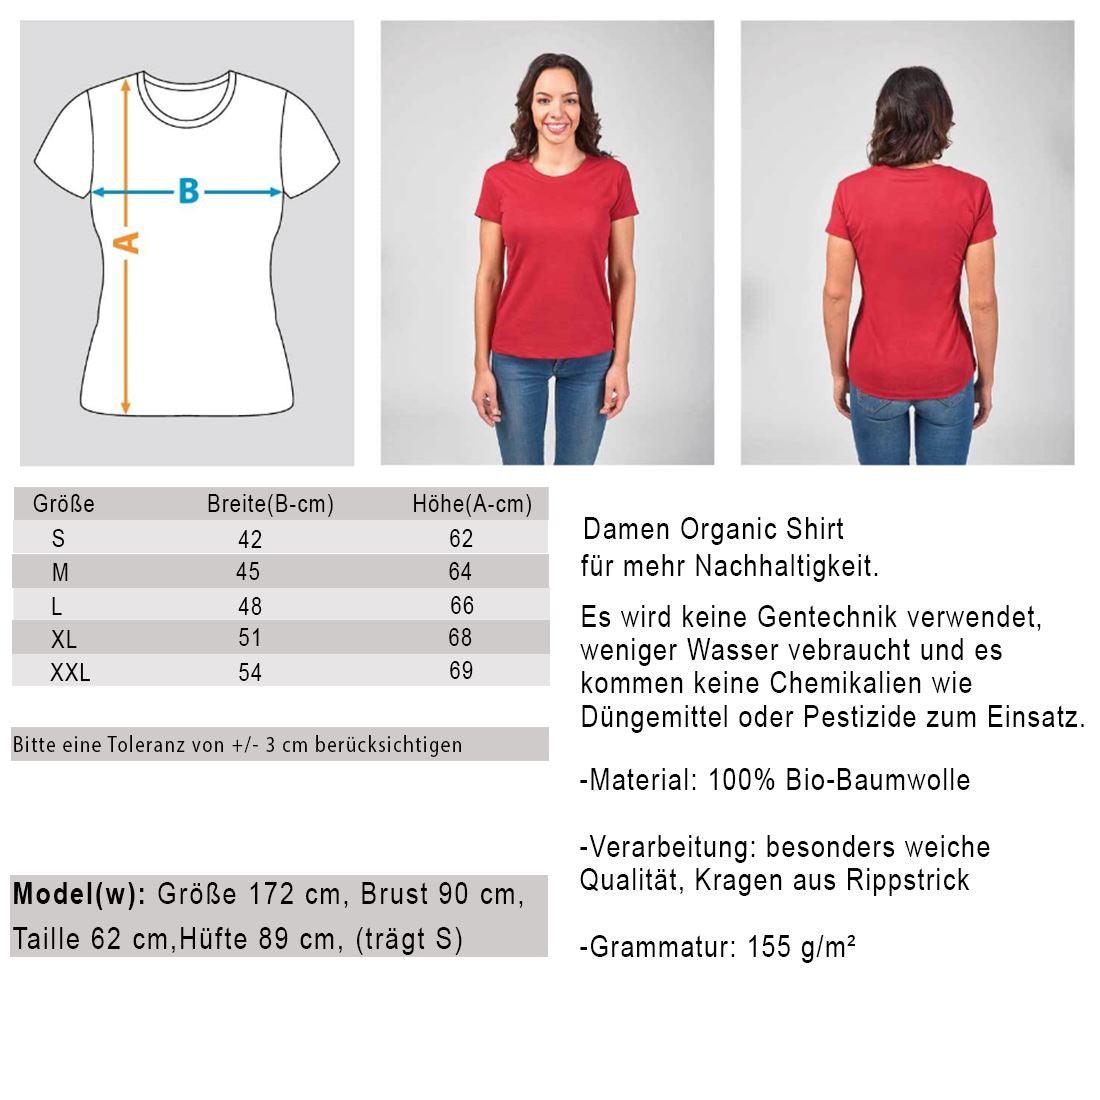 Earthling Nation - Damen Organic Shirt - Team Vegan © vegan t shirt